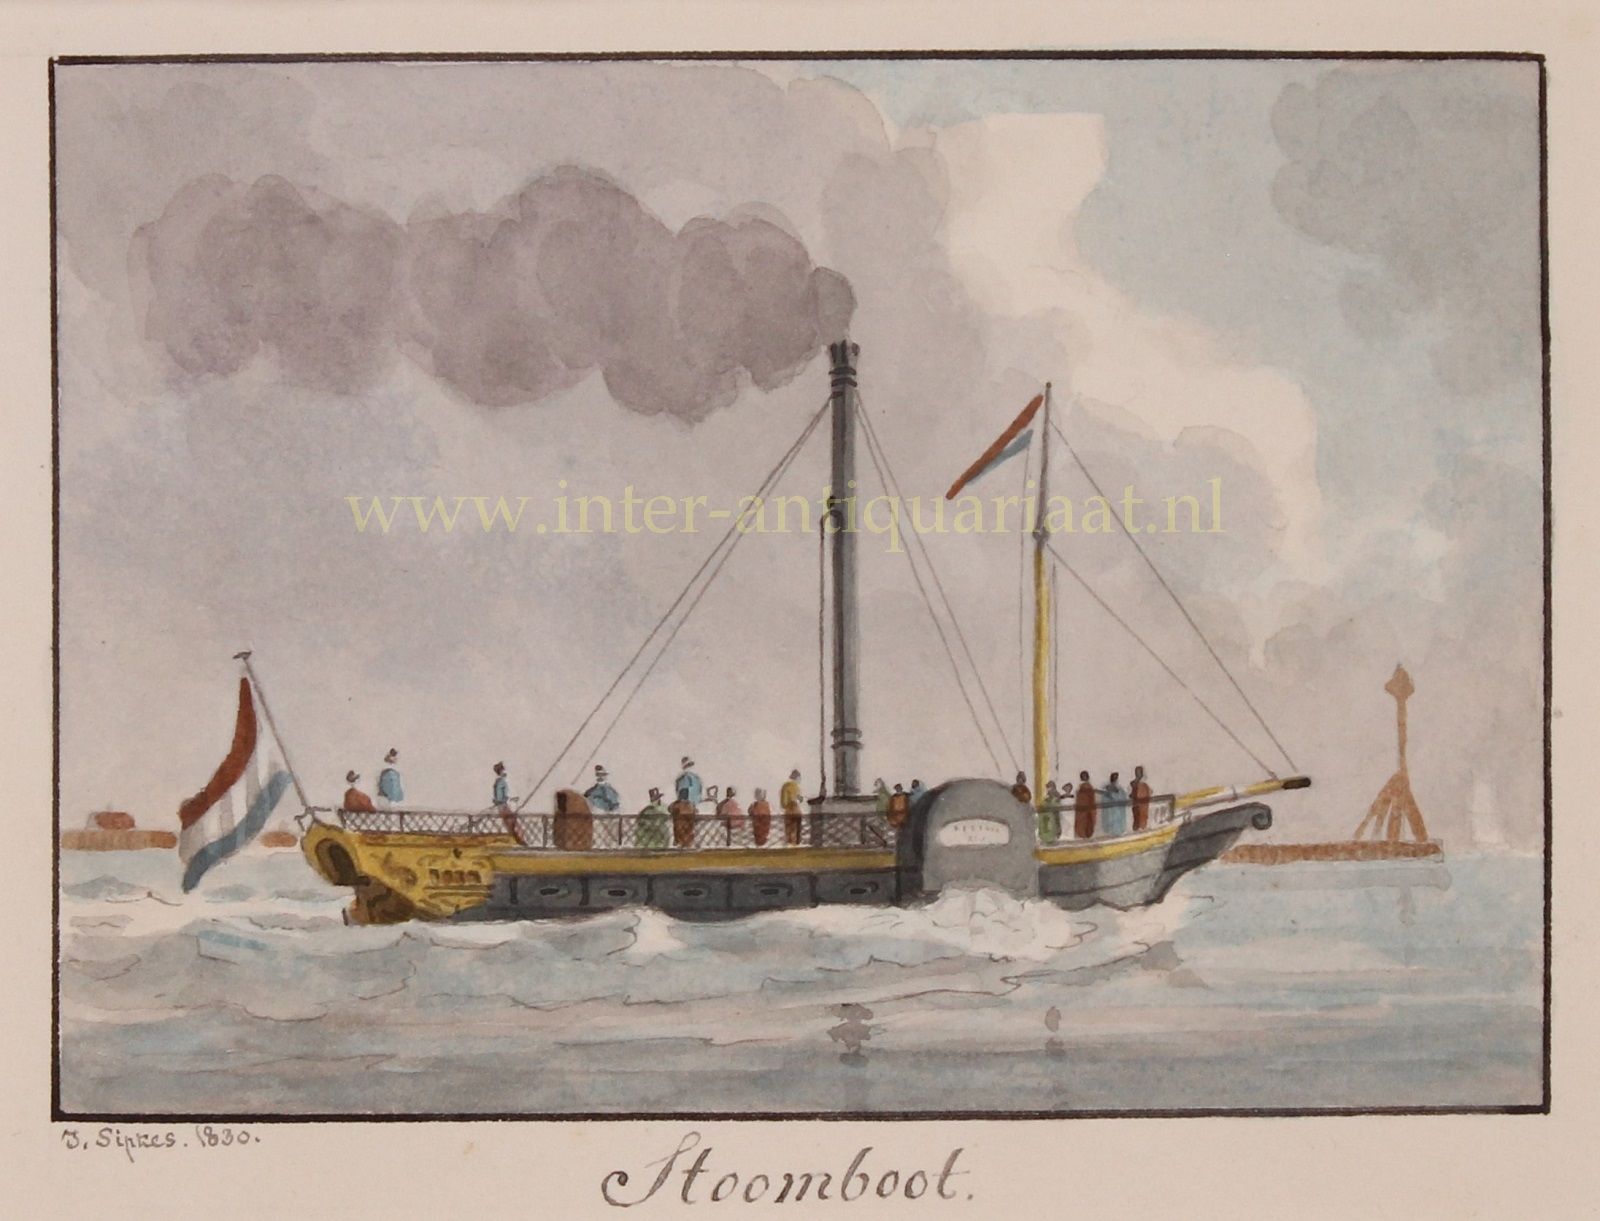 Sipkes-- Joseph - Dutch paddle steamer - Joseph Sipkes, 1830